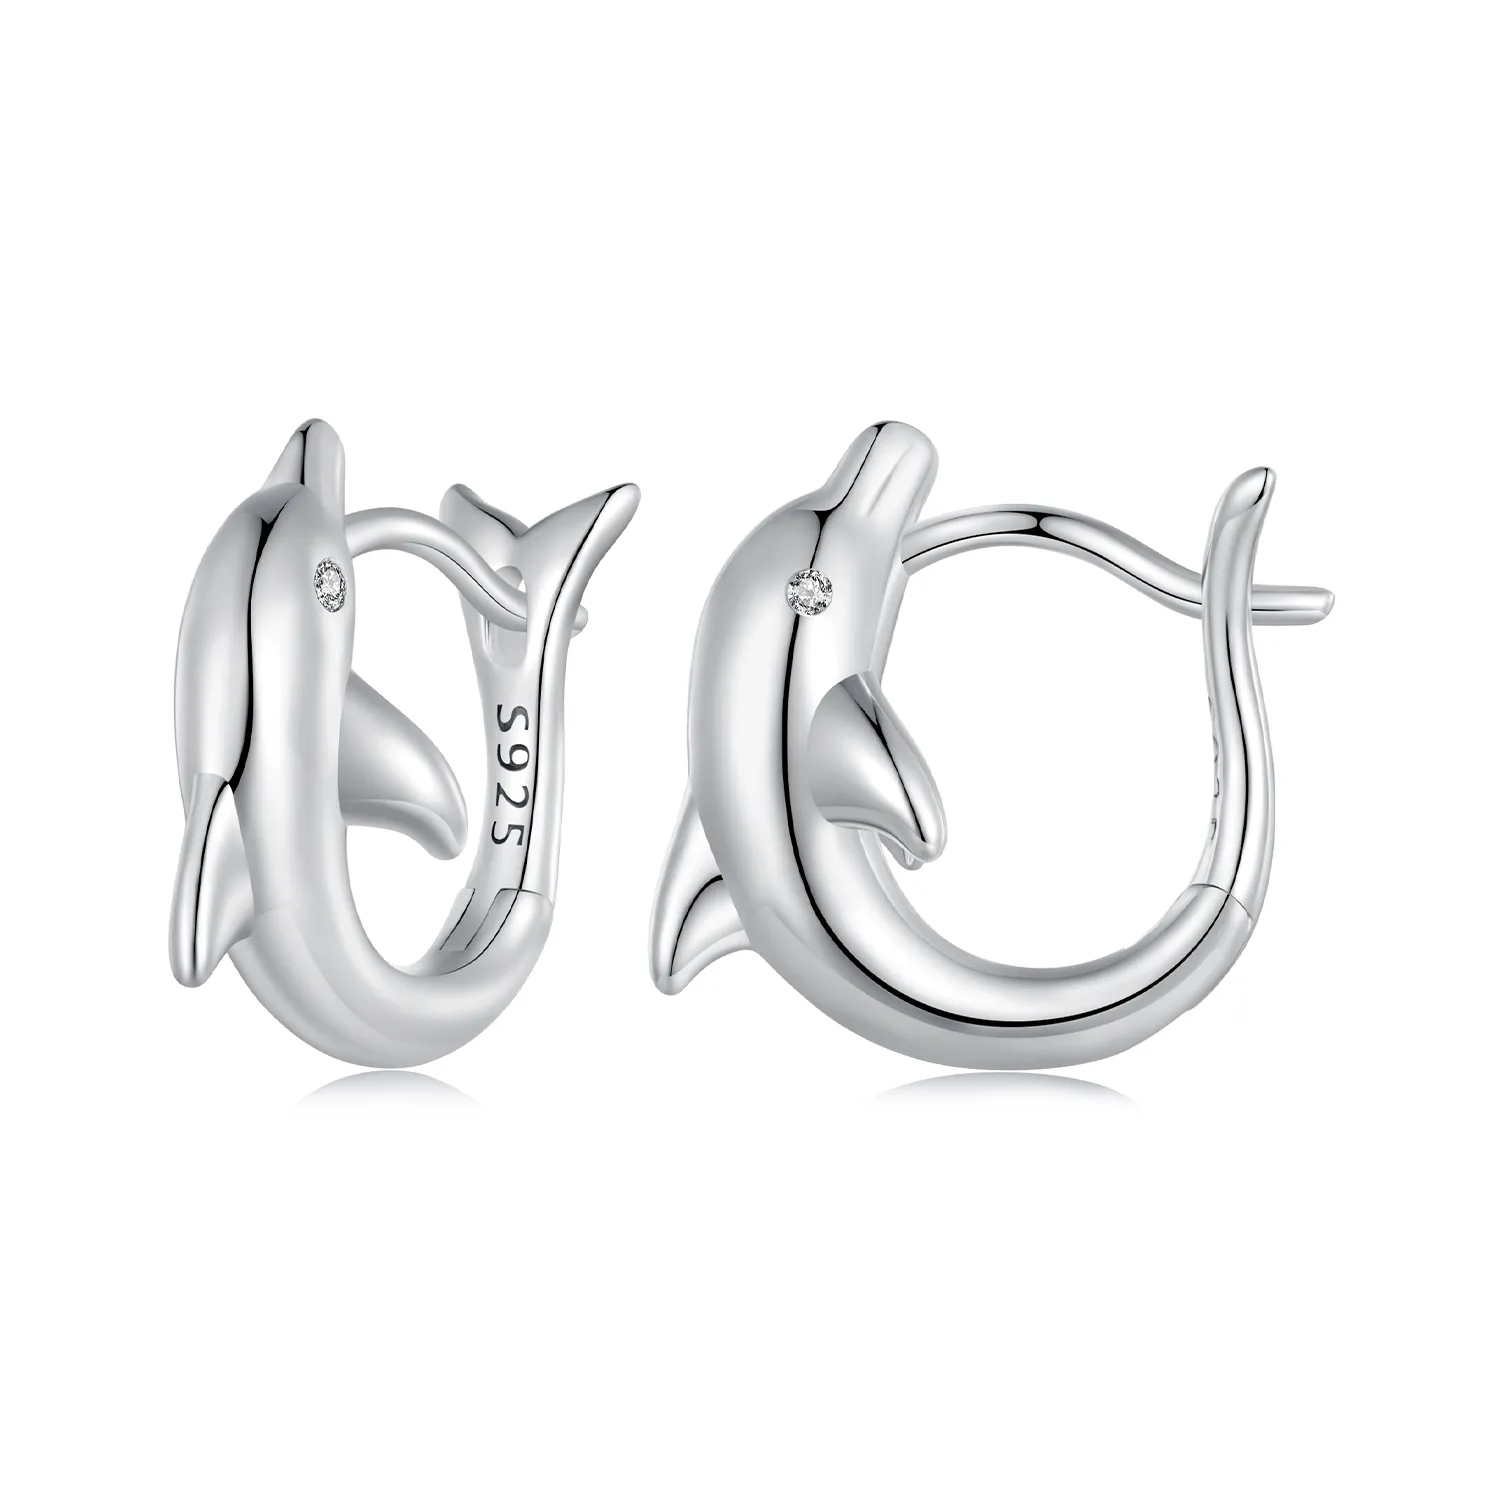 Pandora Style Dolphin Hoop Earrings - BSE881